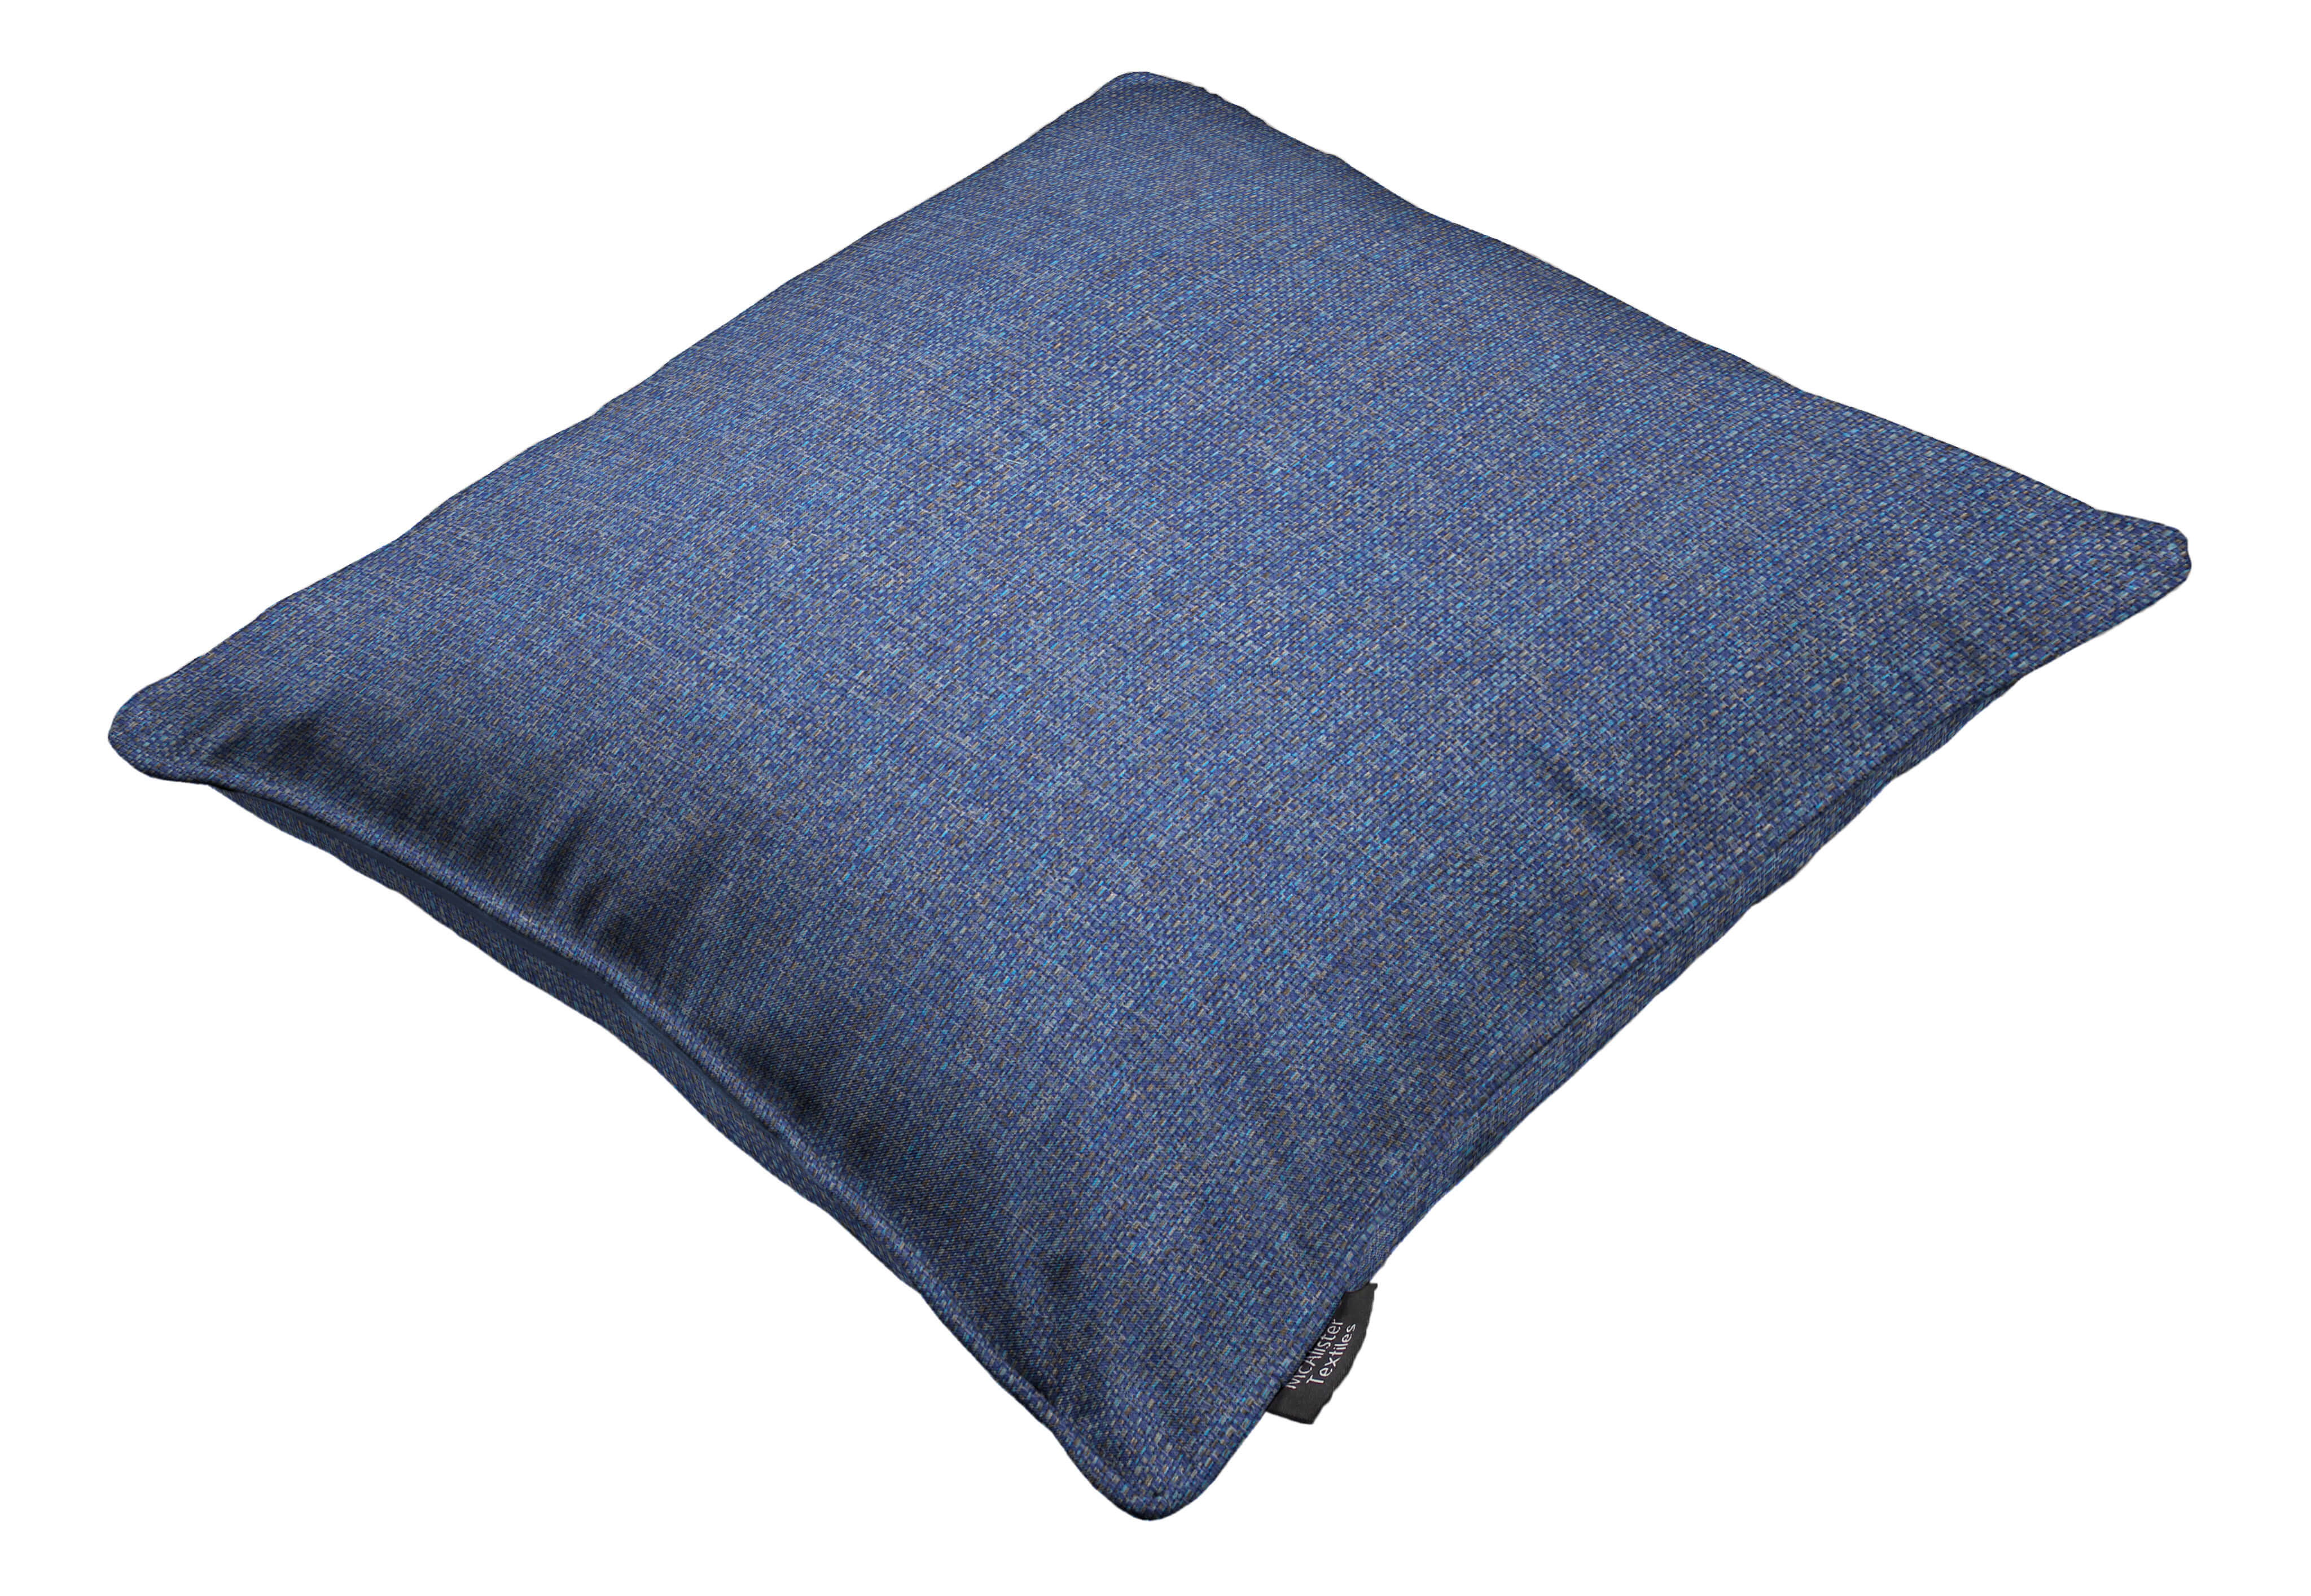 Roma Blue Piped Cushion